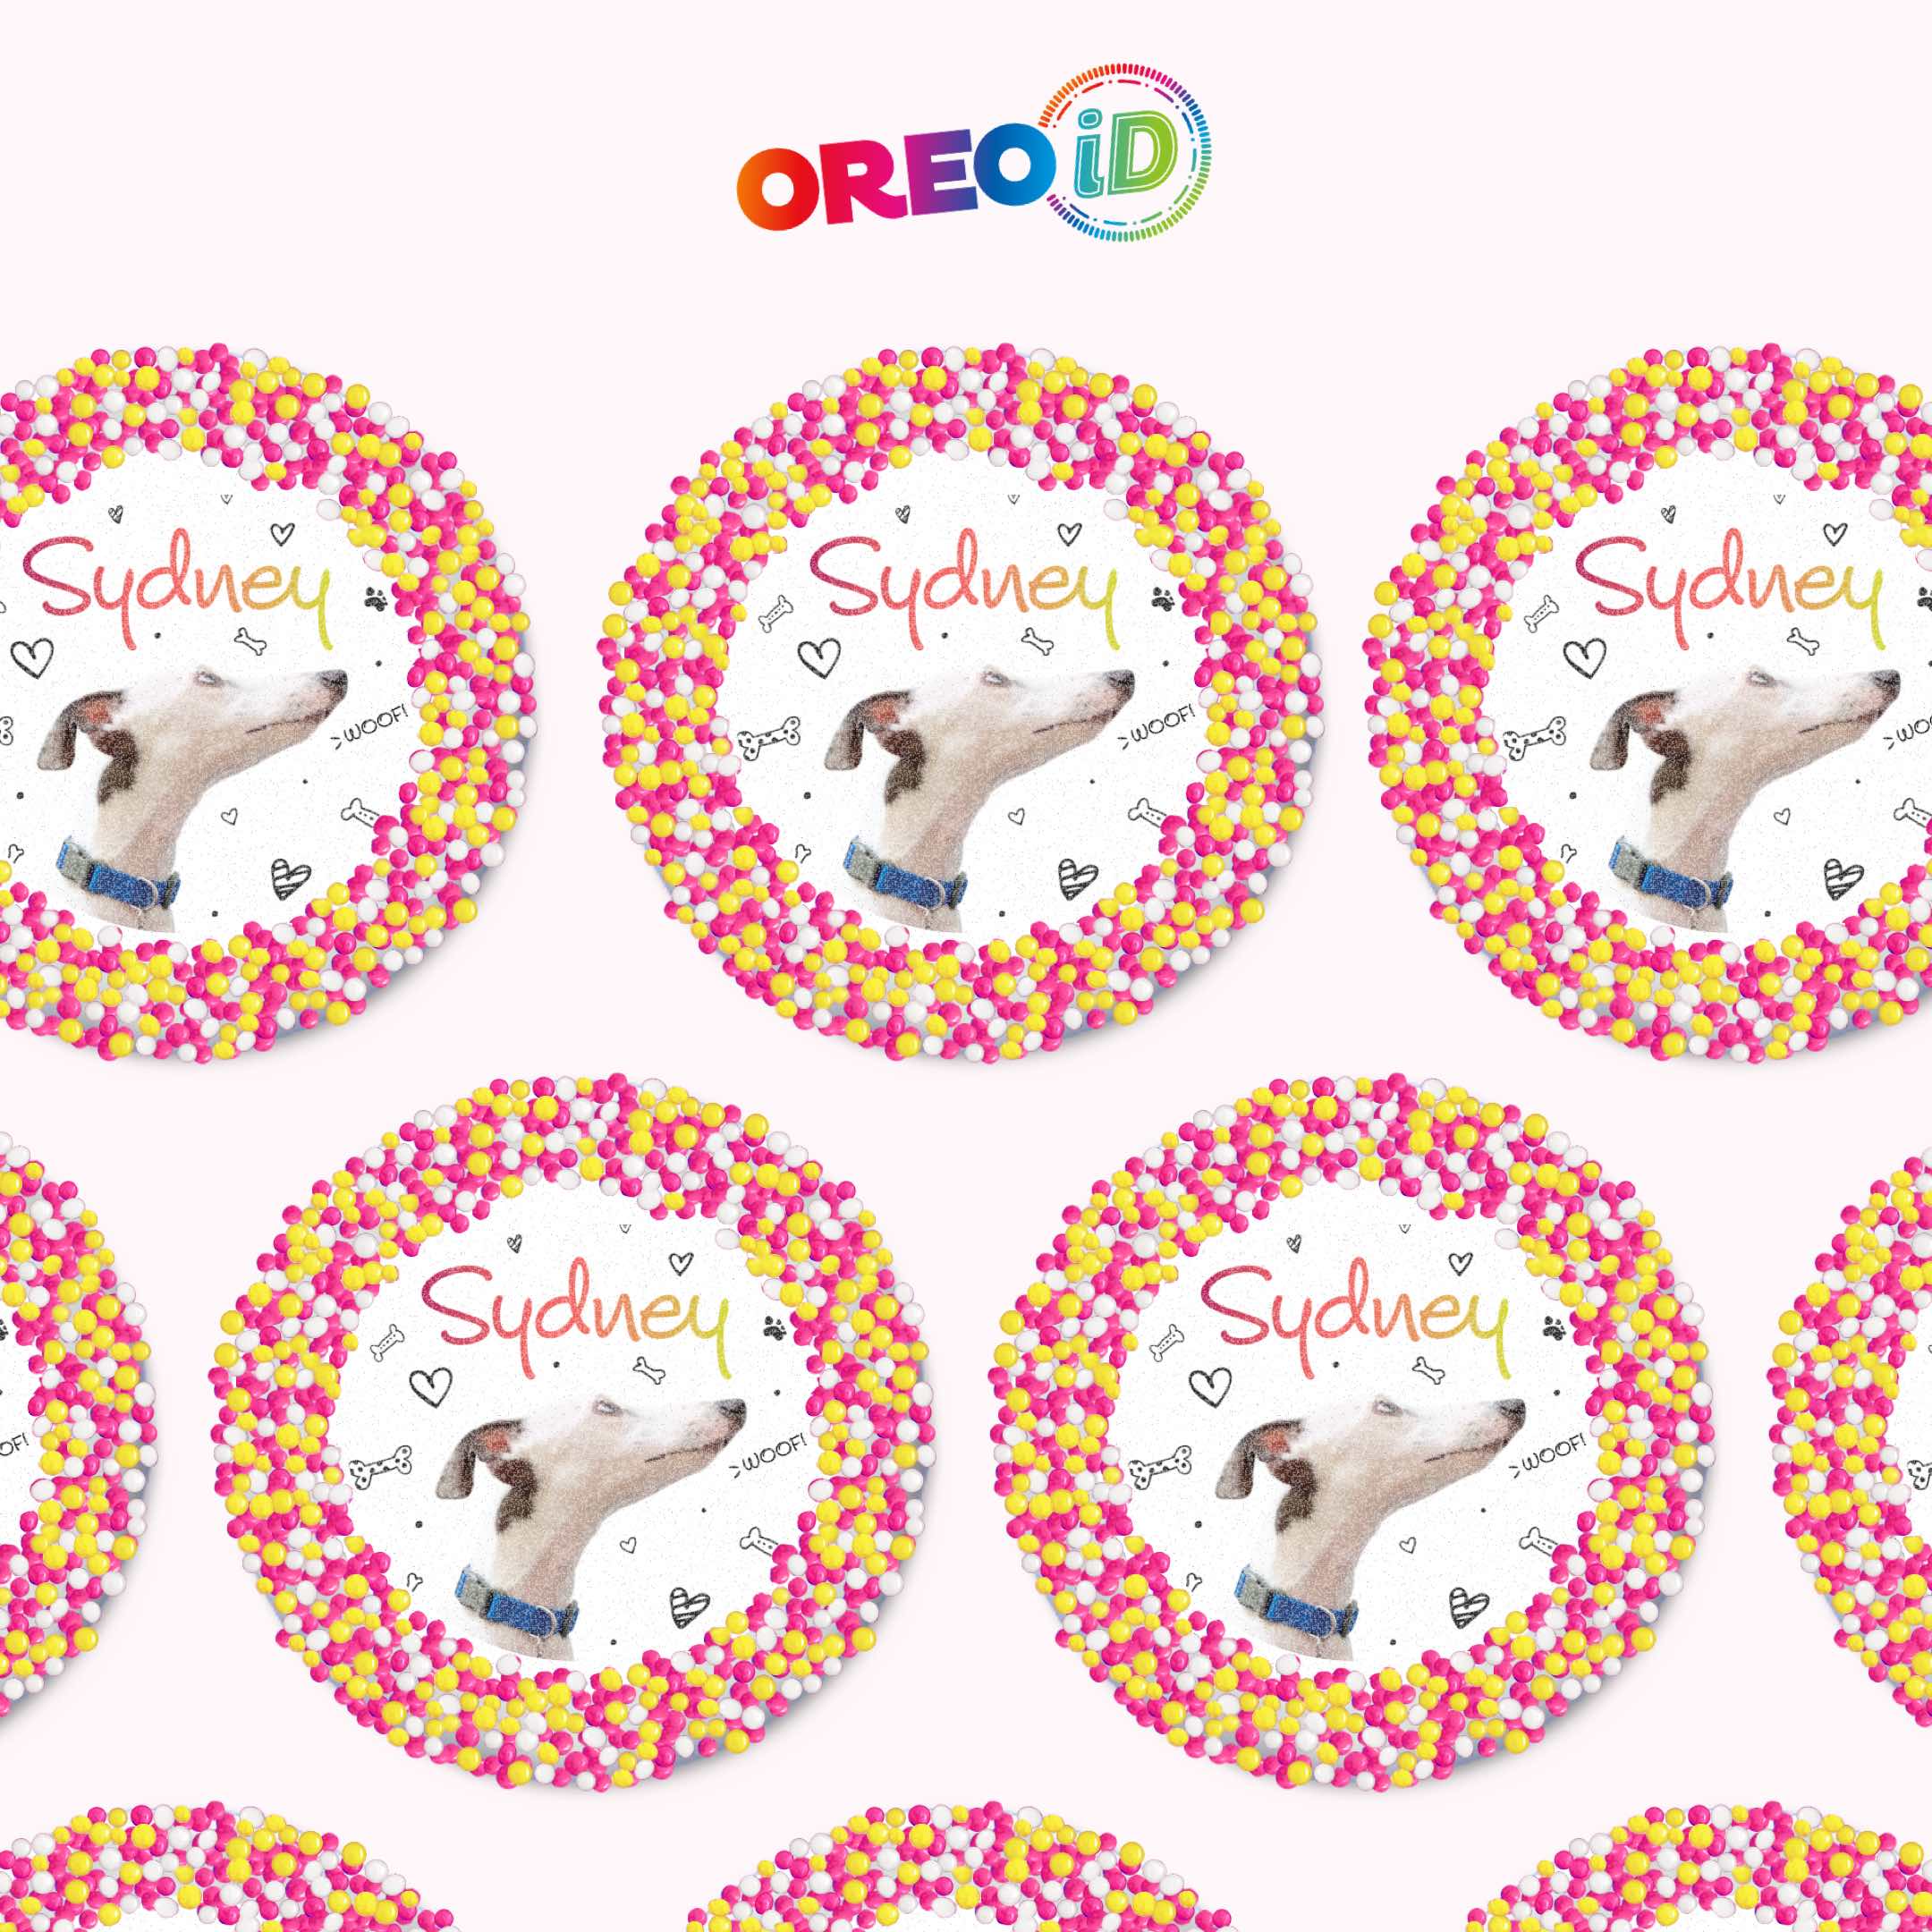 Custom Oreos with OREOiD